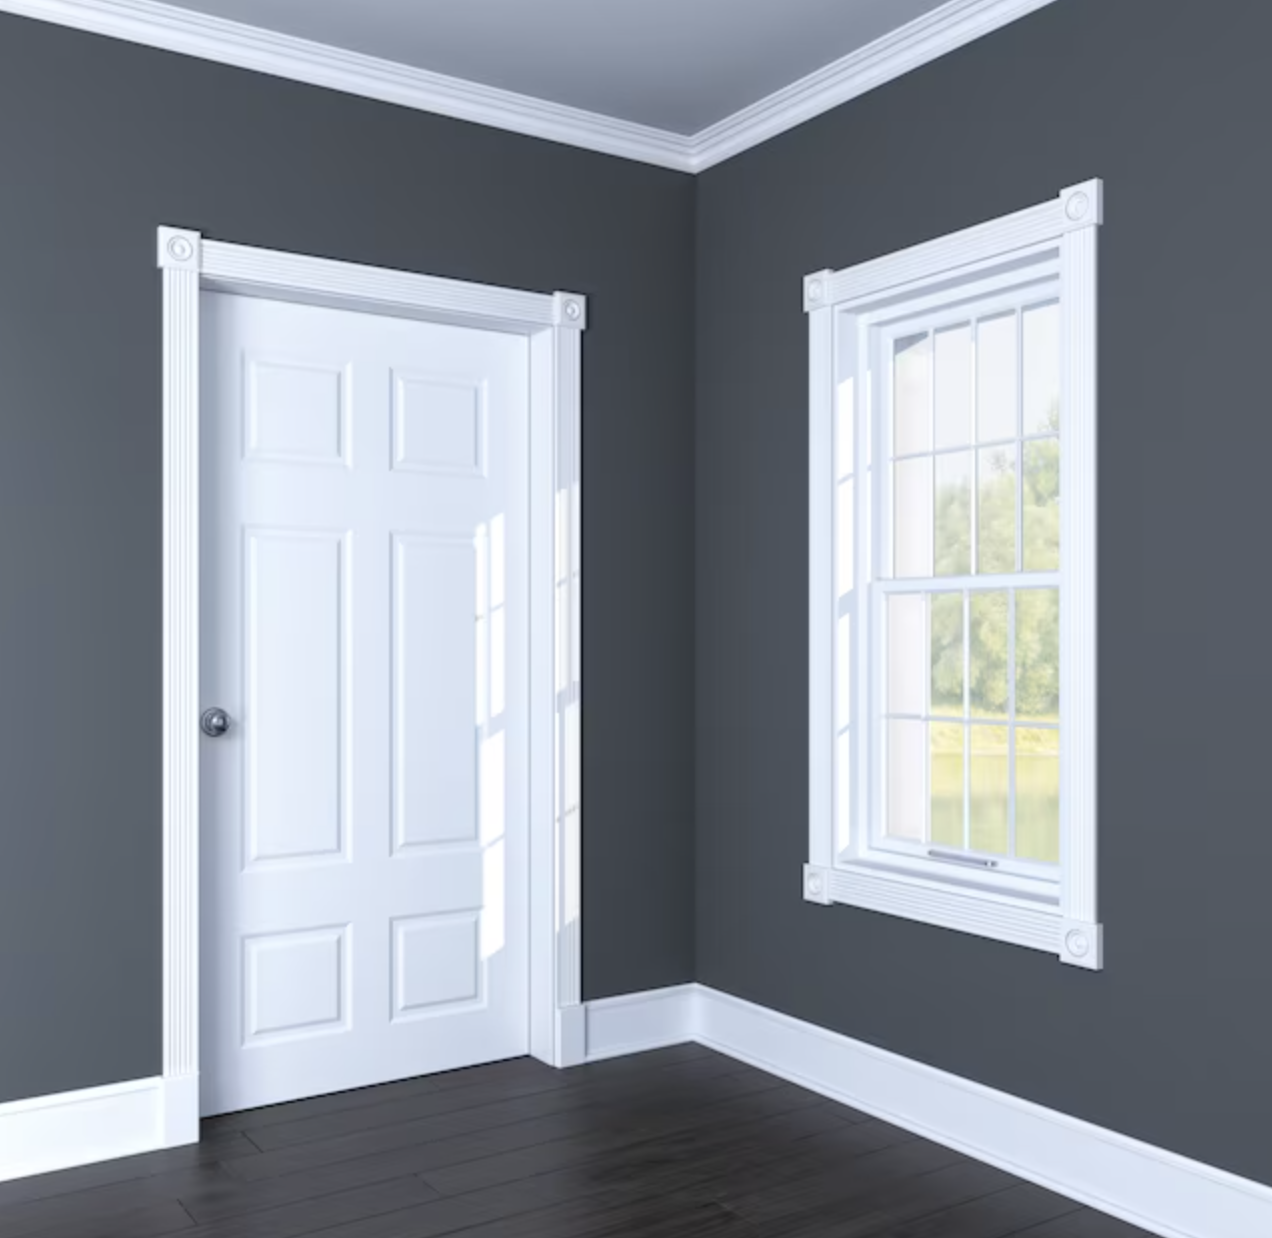 white casing around white door in a grey room